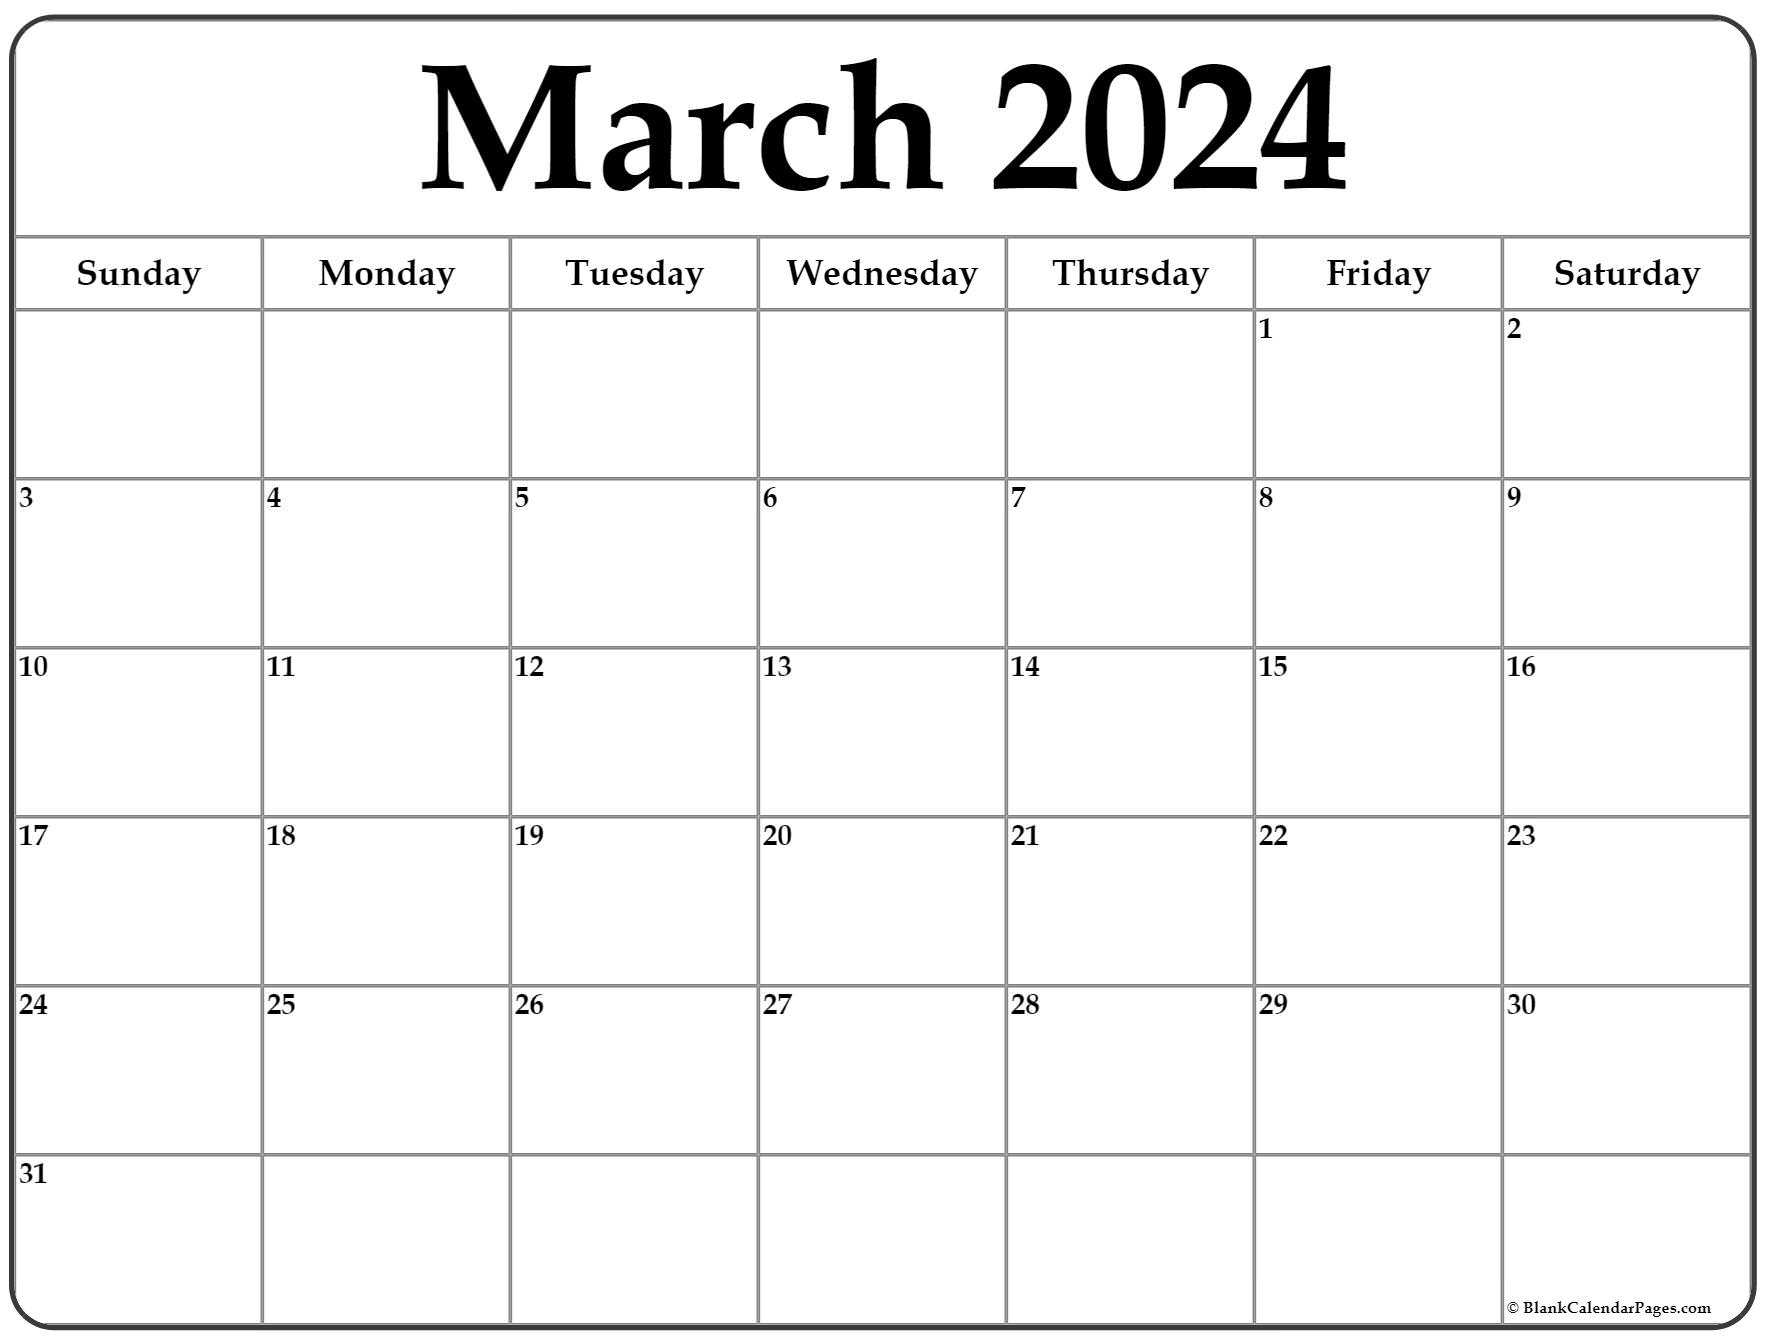 March 2024 Calendar | Free Printable Calendar intended for Free Printable Calendar 2024 For March